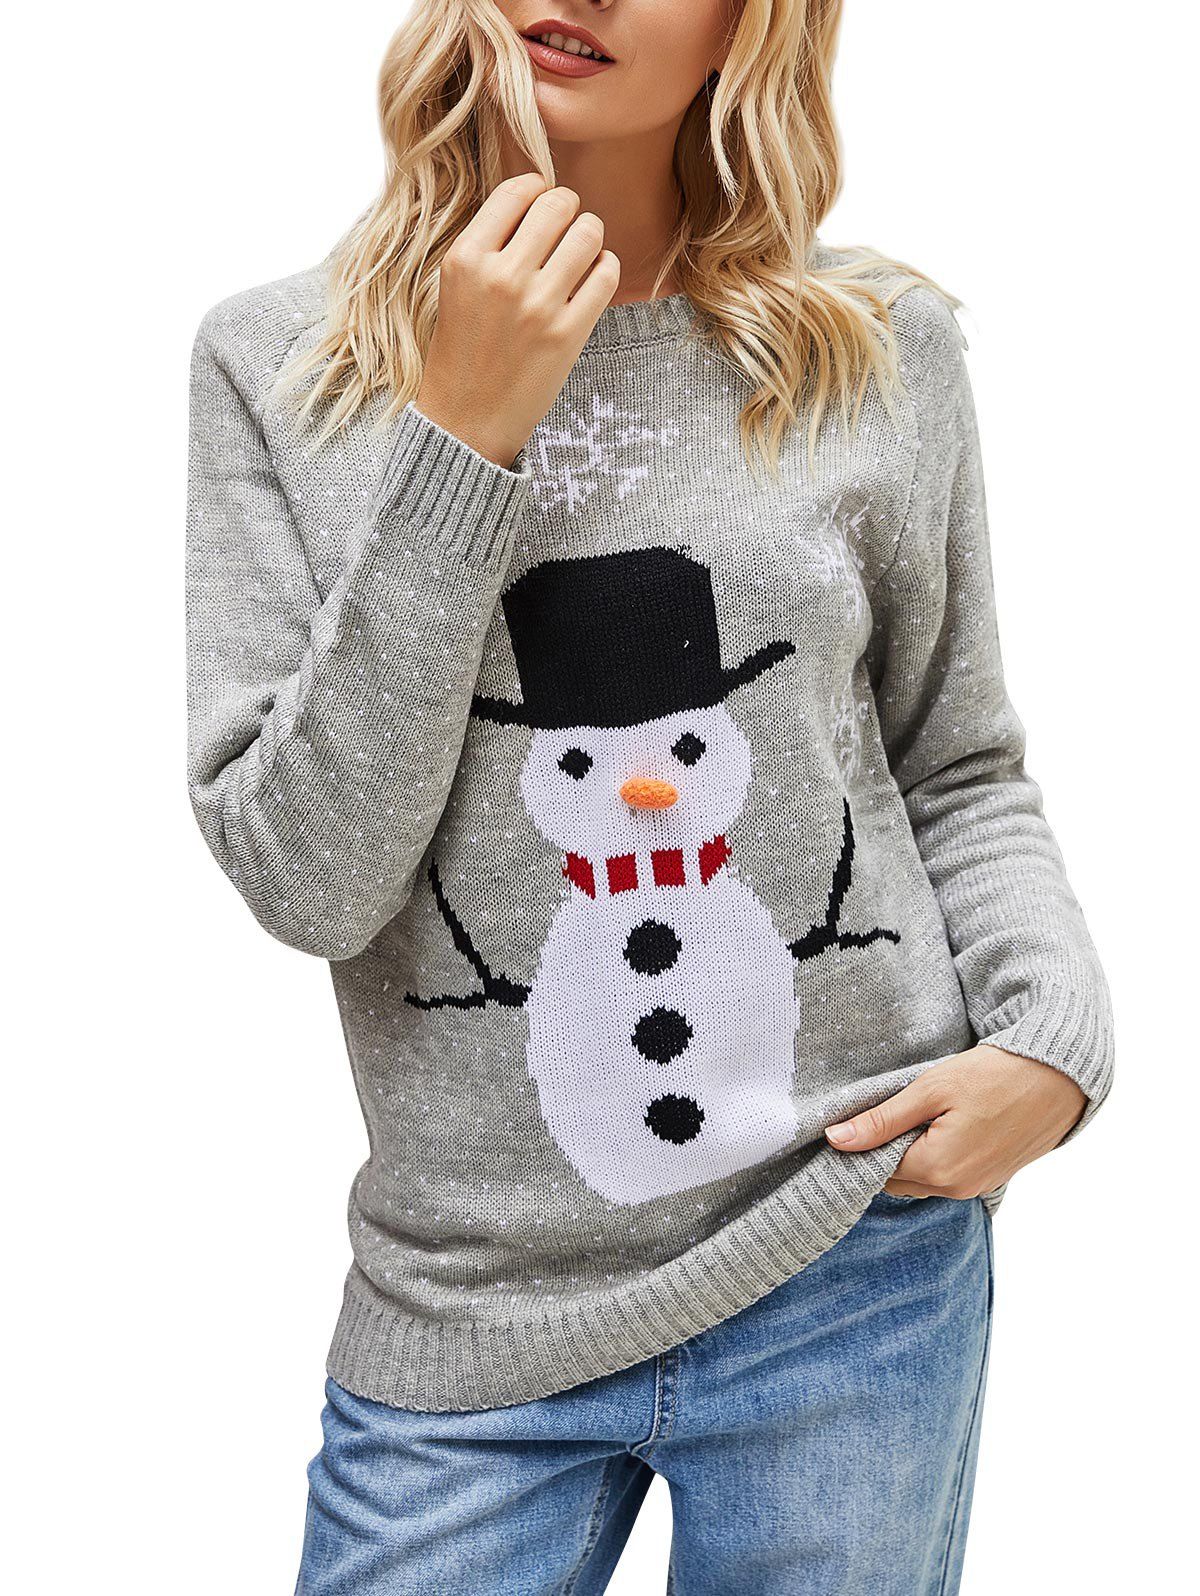 Snowman Snowflake Graphic Christmas Sweater - GRAY XL